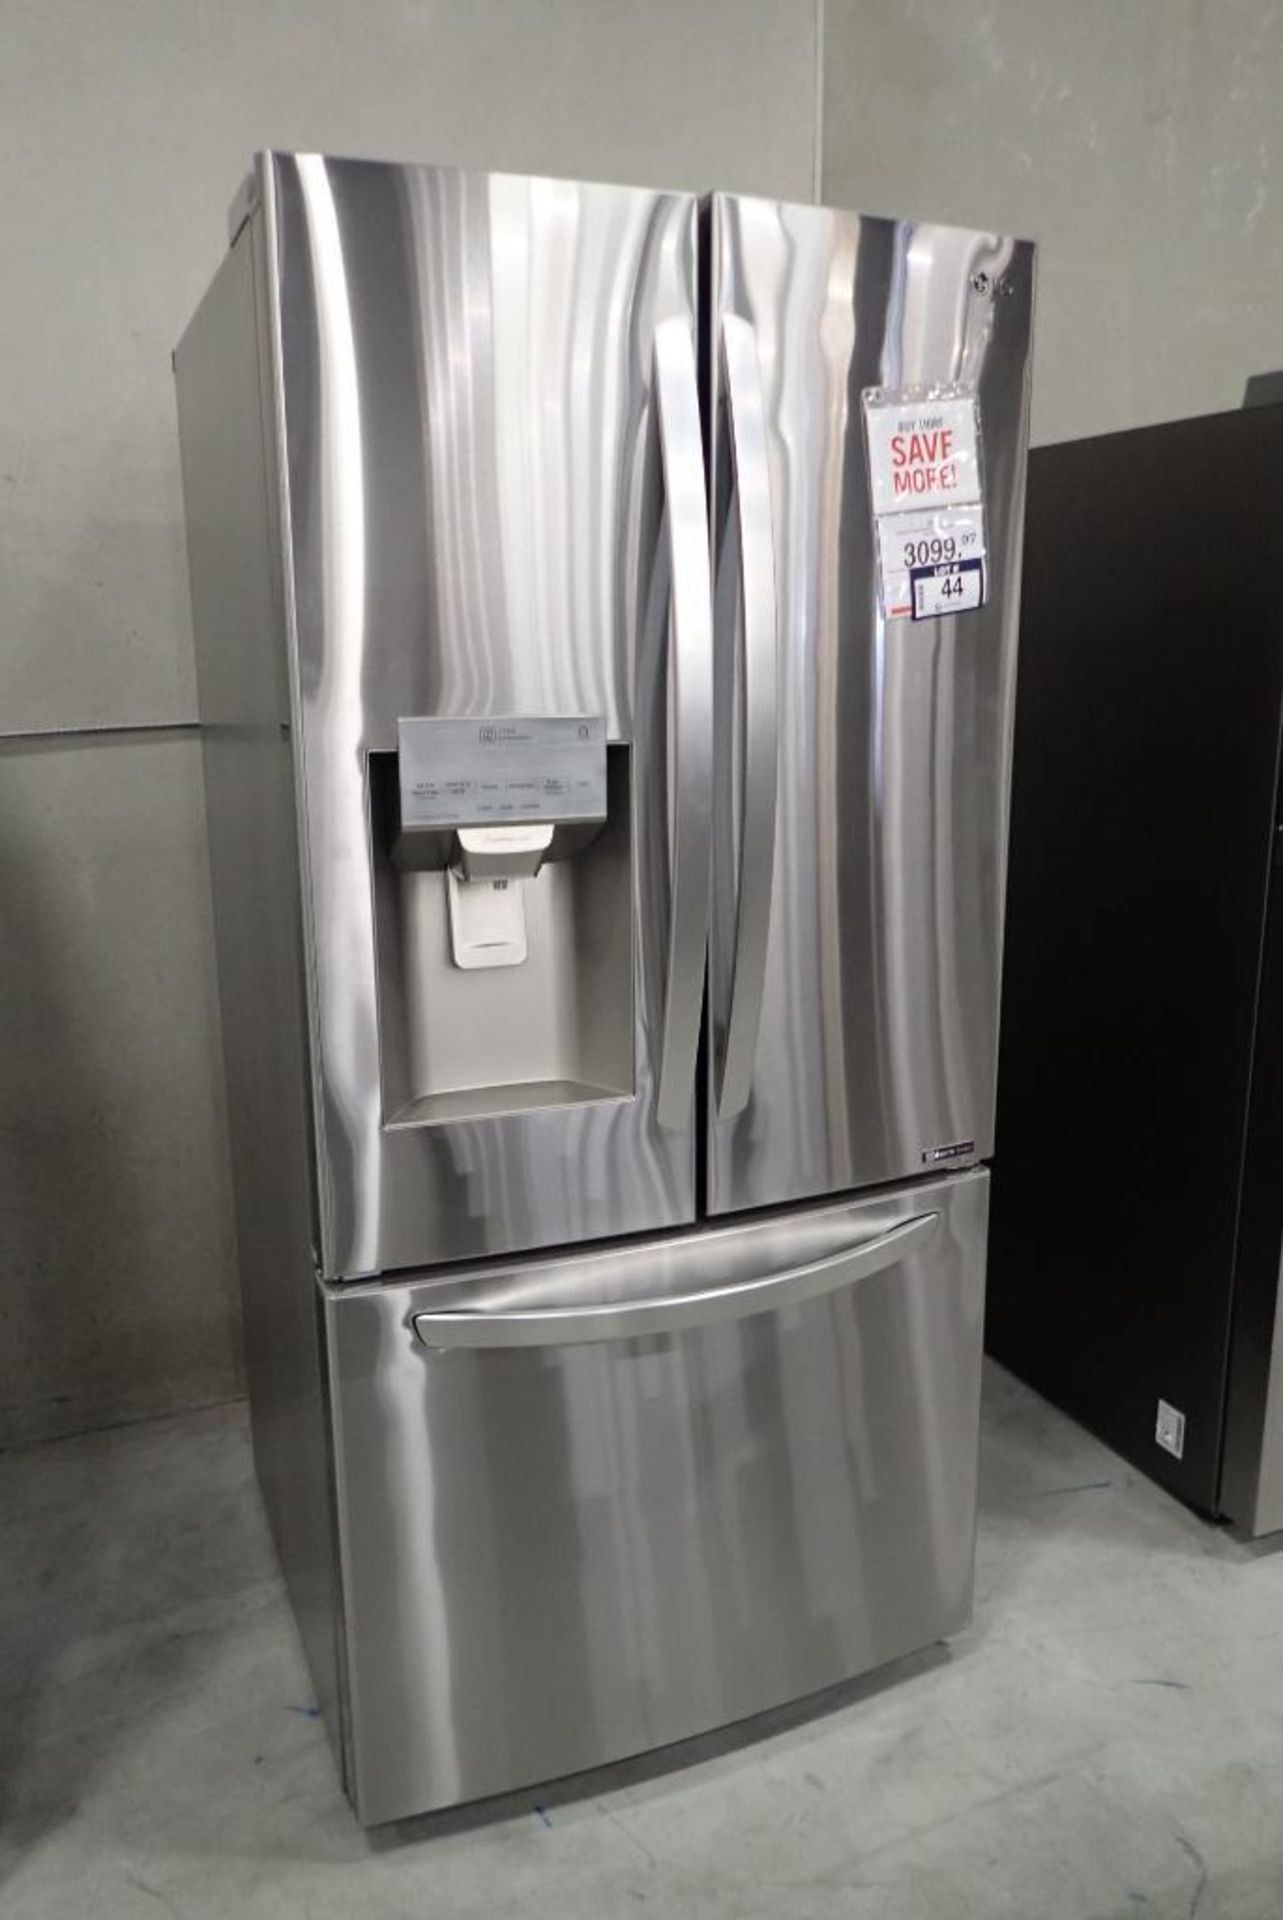 LG Inverter Linear LRFX825038 Stainless Steel French Door Refrigerator.